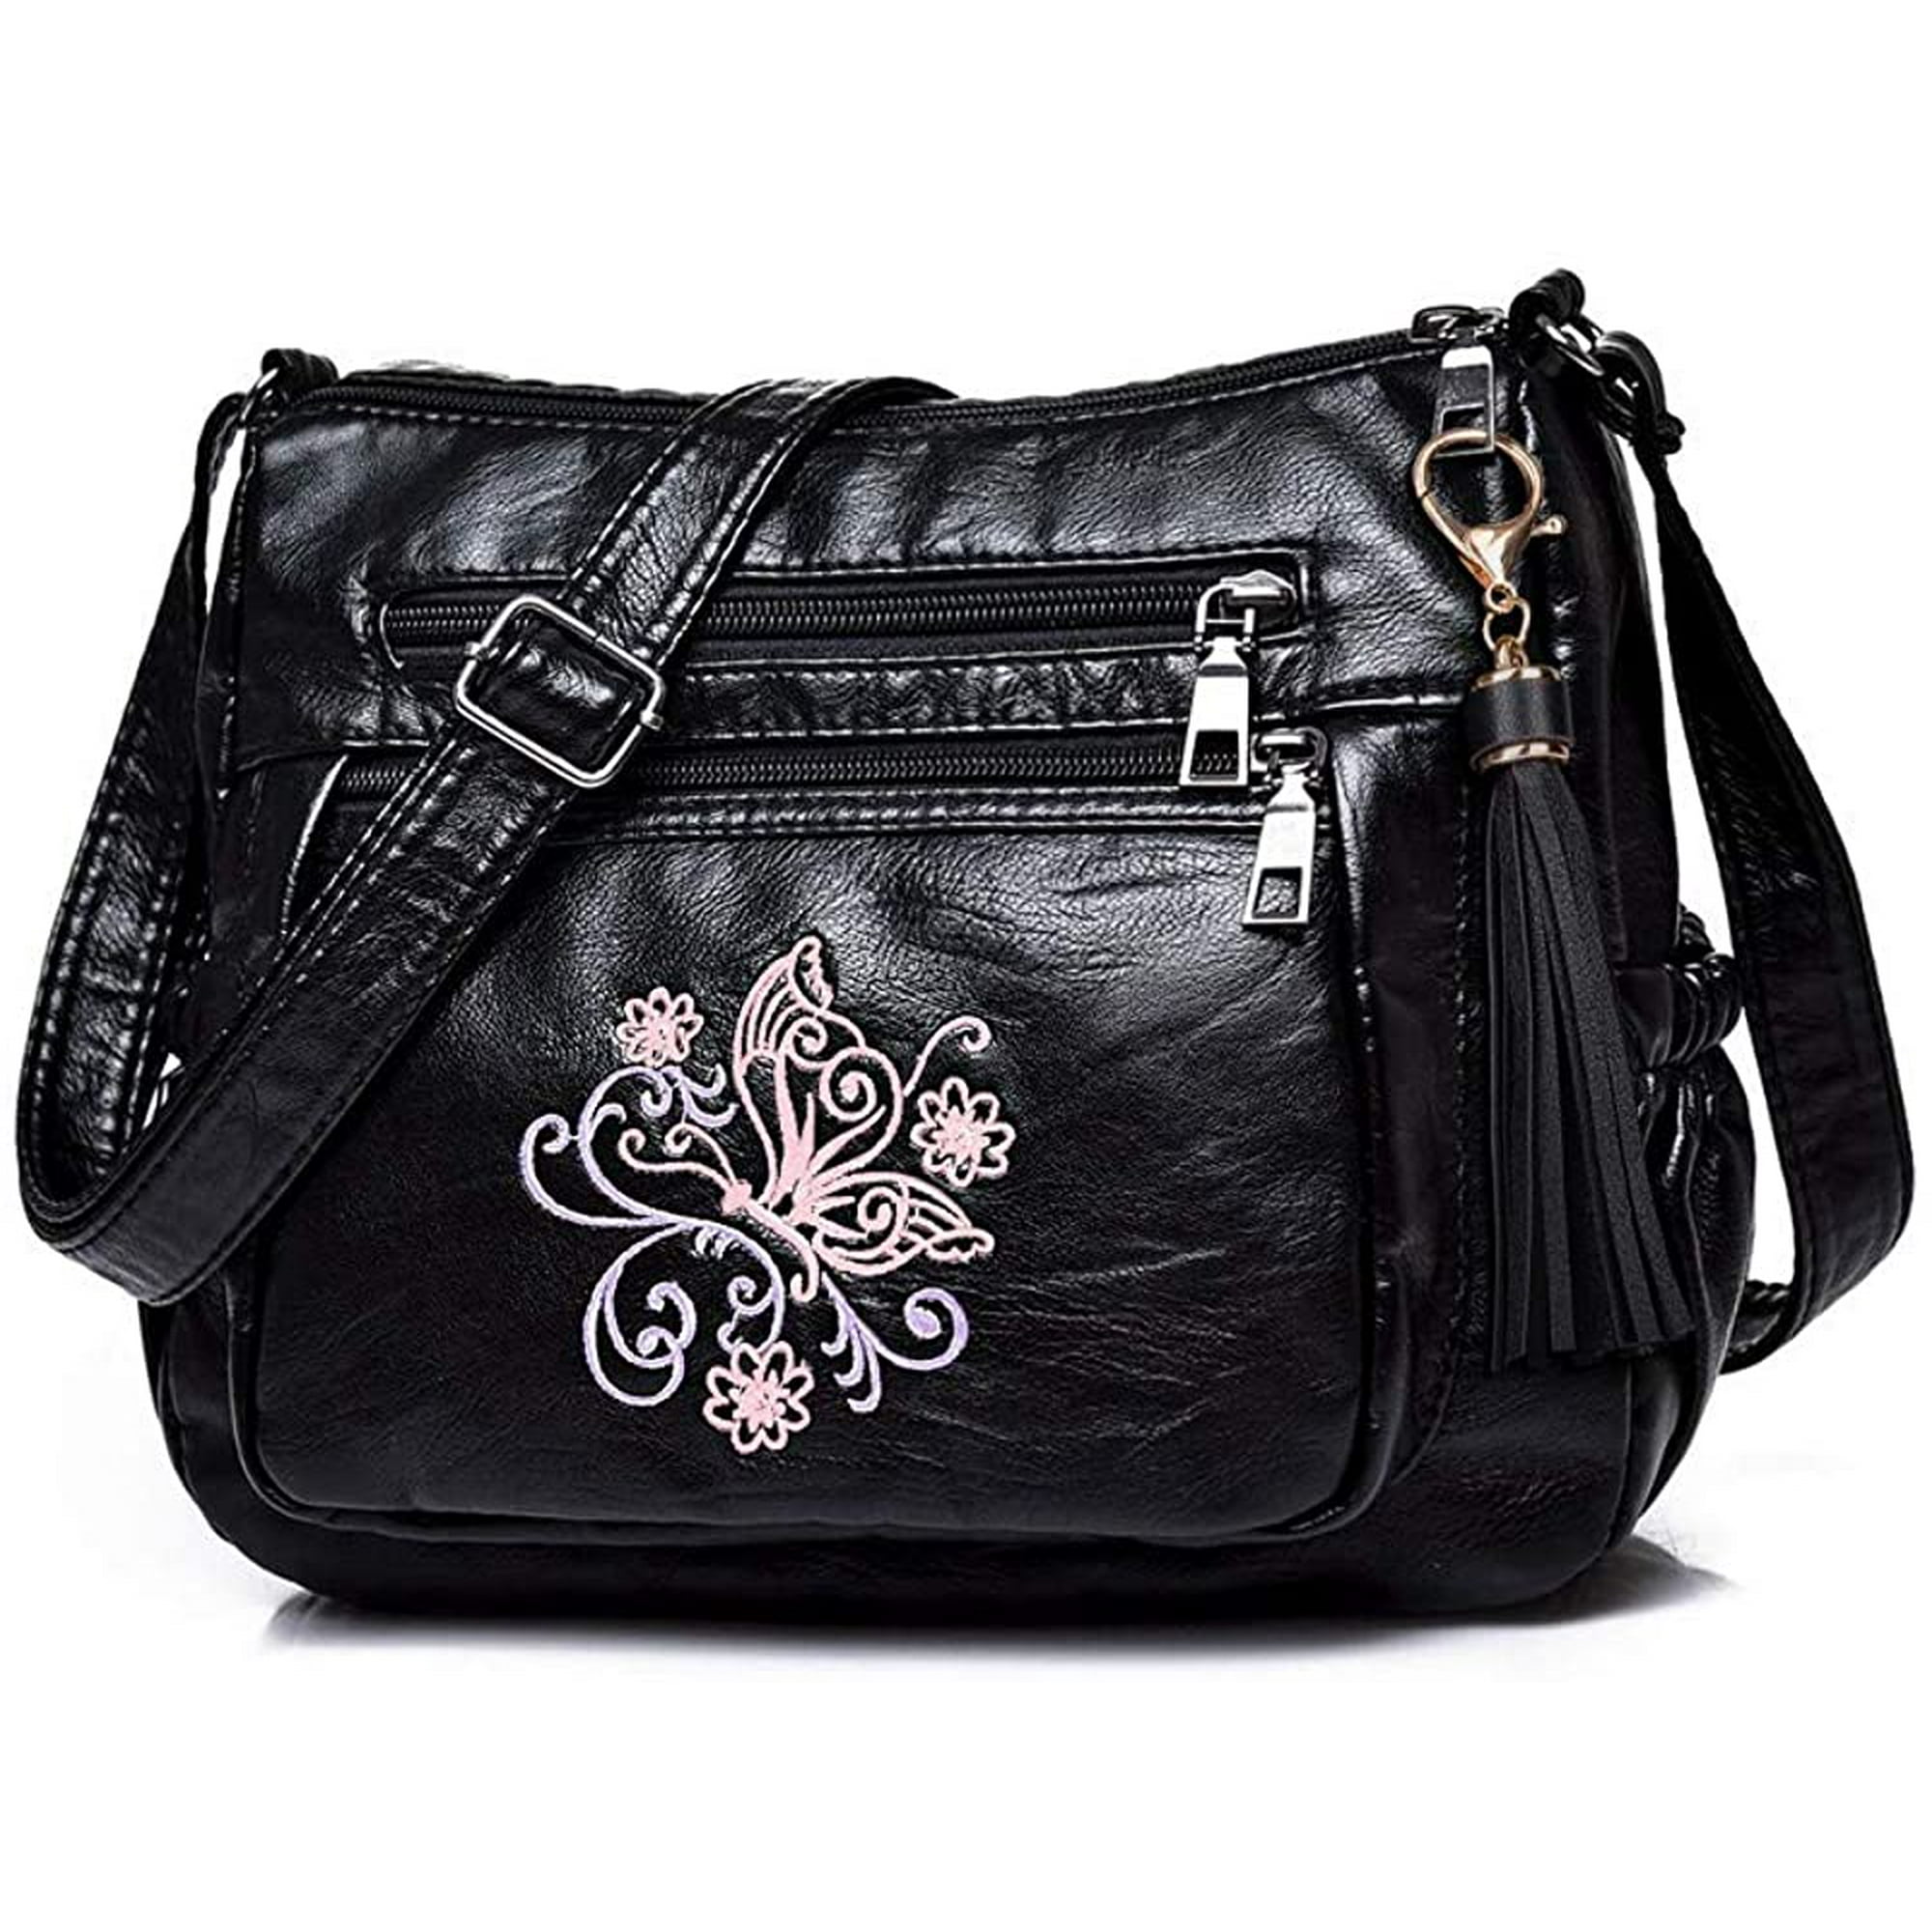 ELDA Crossbody Bags For Women Pocketbooks Soft PU Leather Purses